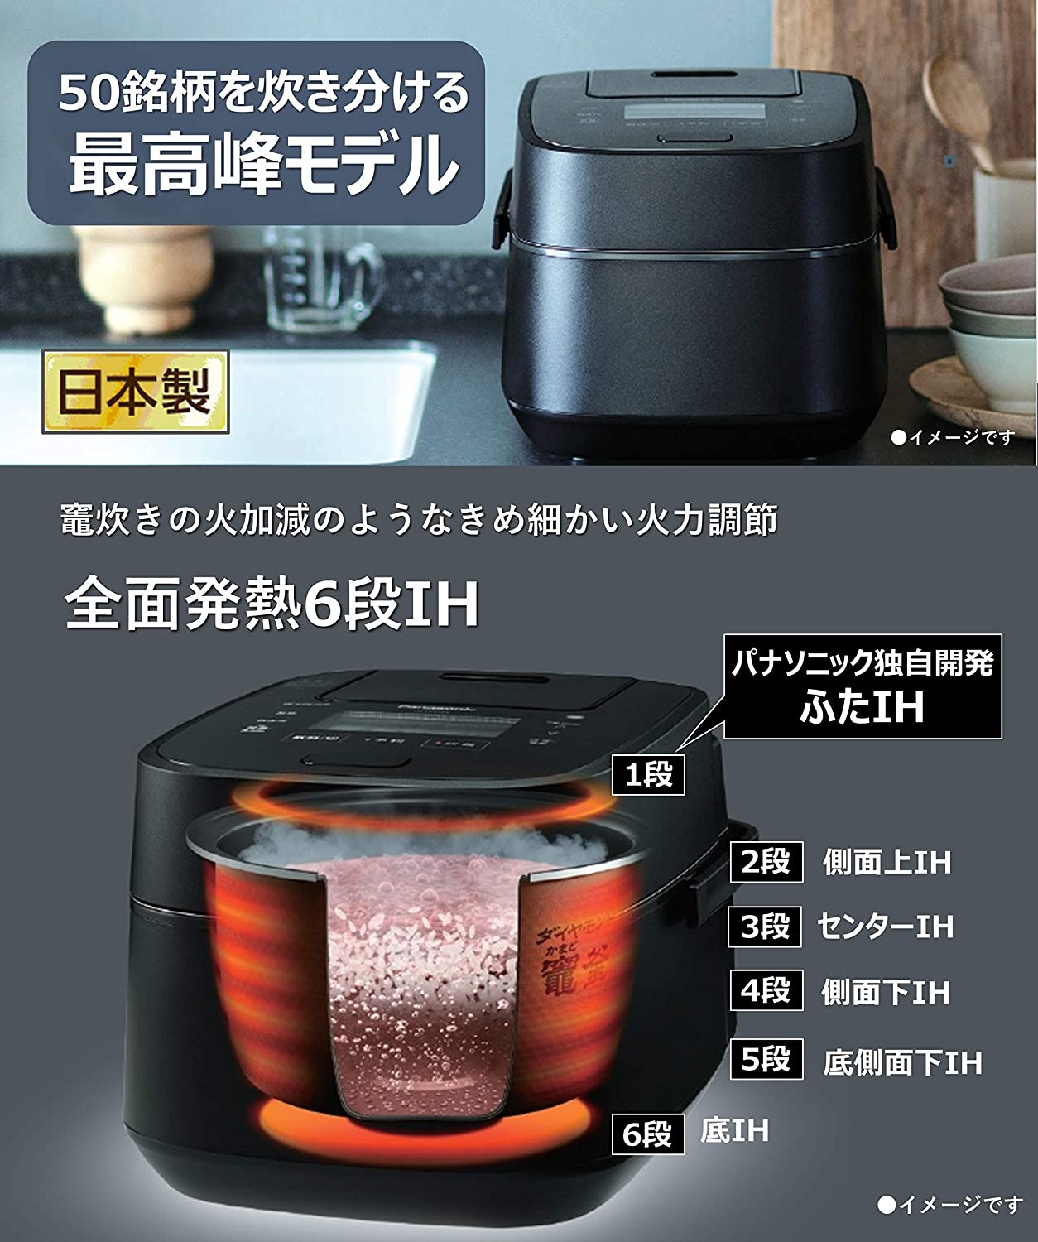 Panasonic(パナソニック) スチーム&可変圧力ＩＨジャー炊飯器 SR-VSX109 ブラックの商品画像2 